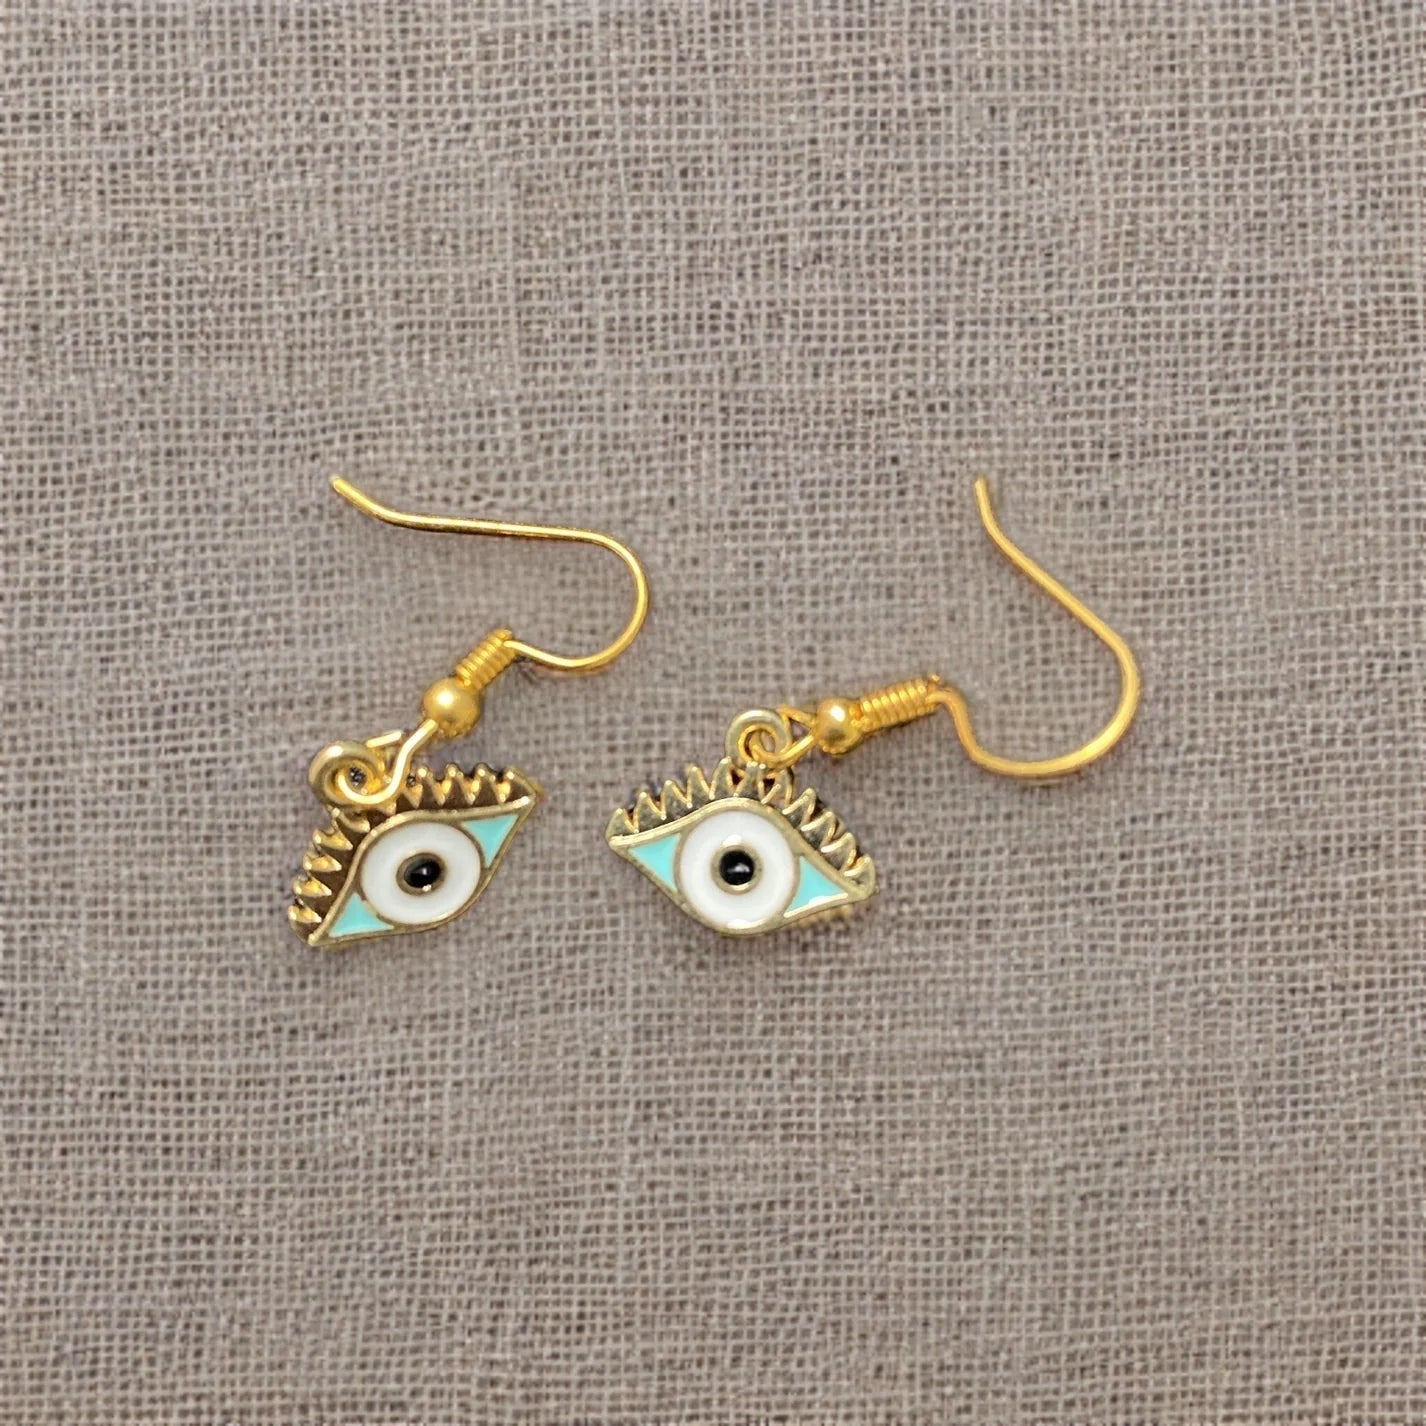 Beads Jewellery | Handmade Earrings for Women